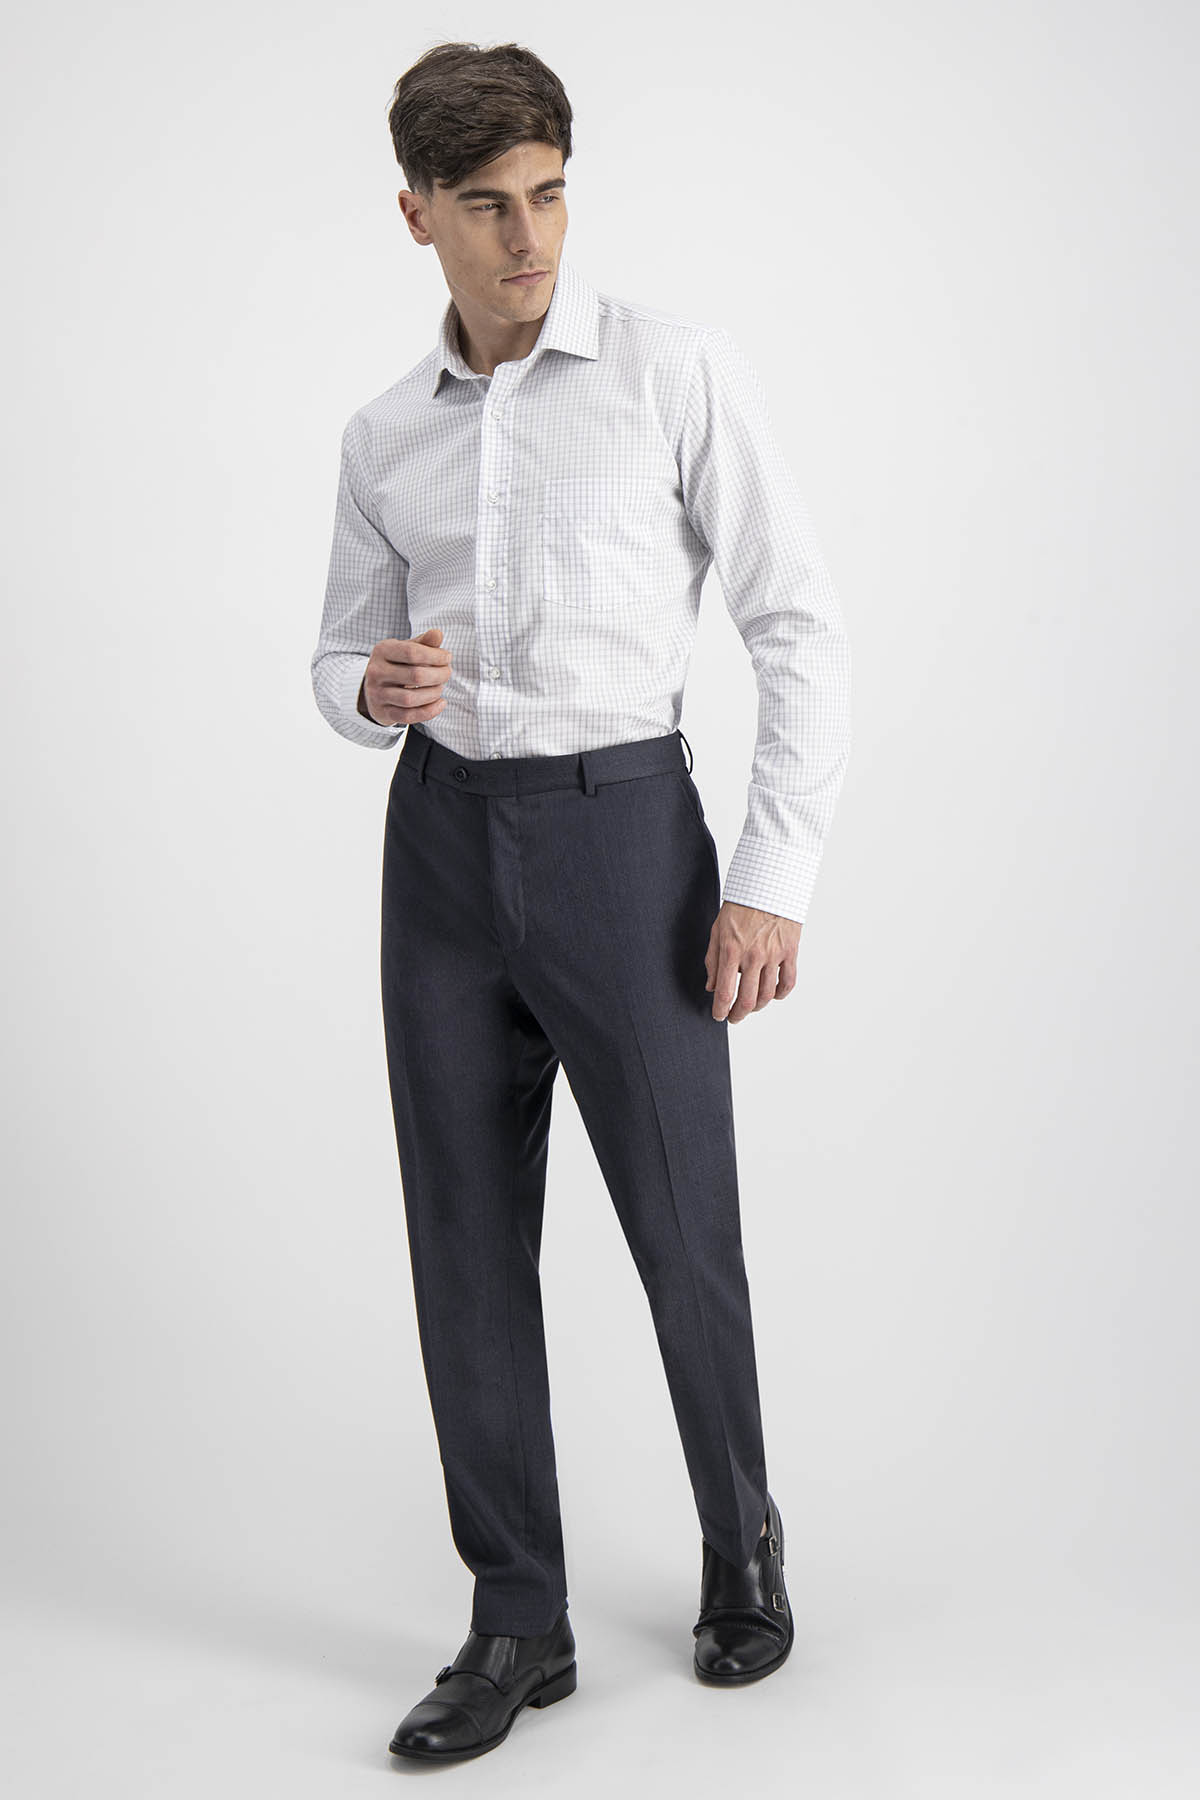 Pantalón Roberts Slim fit Color gris oxford